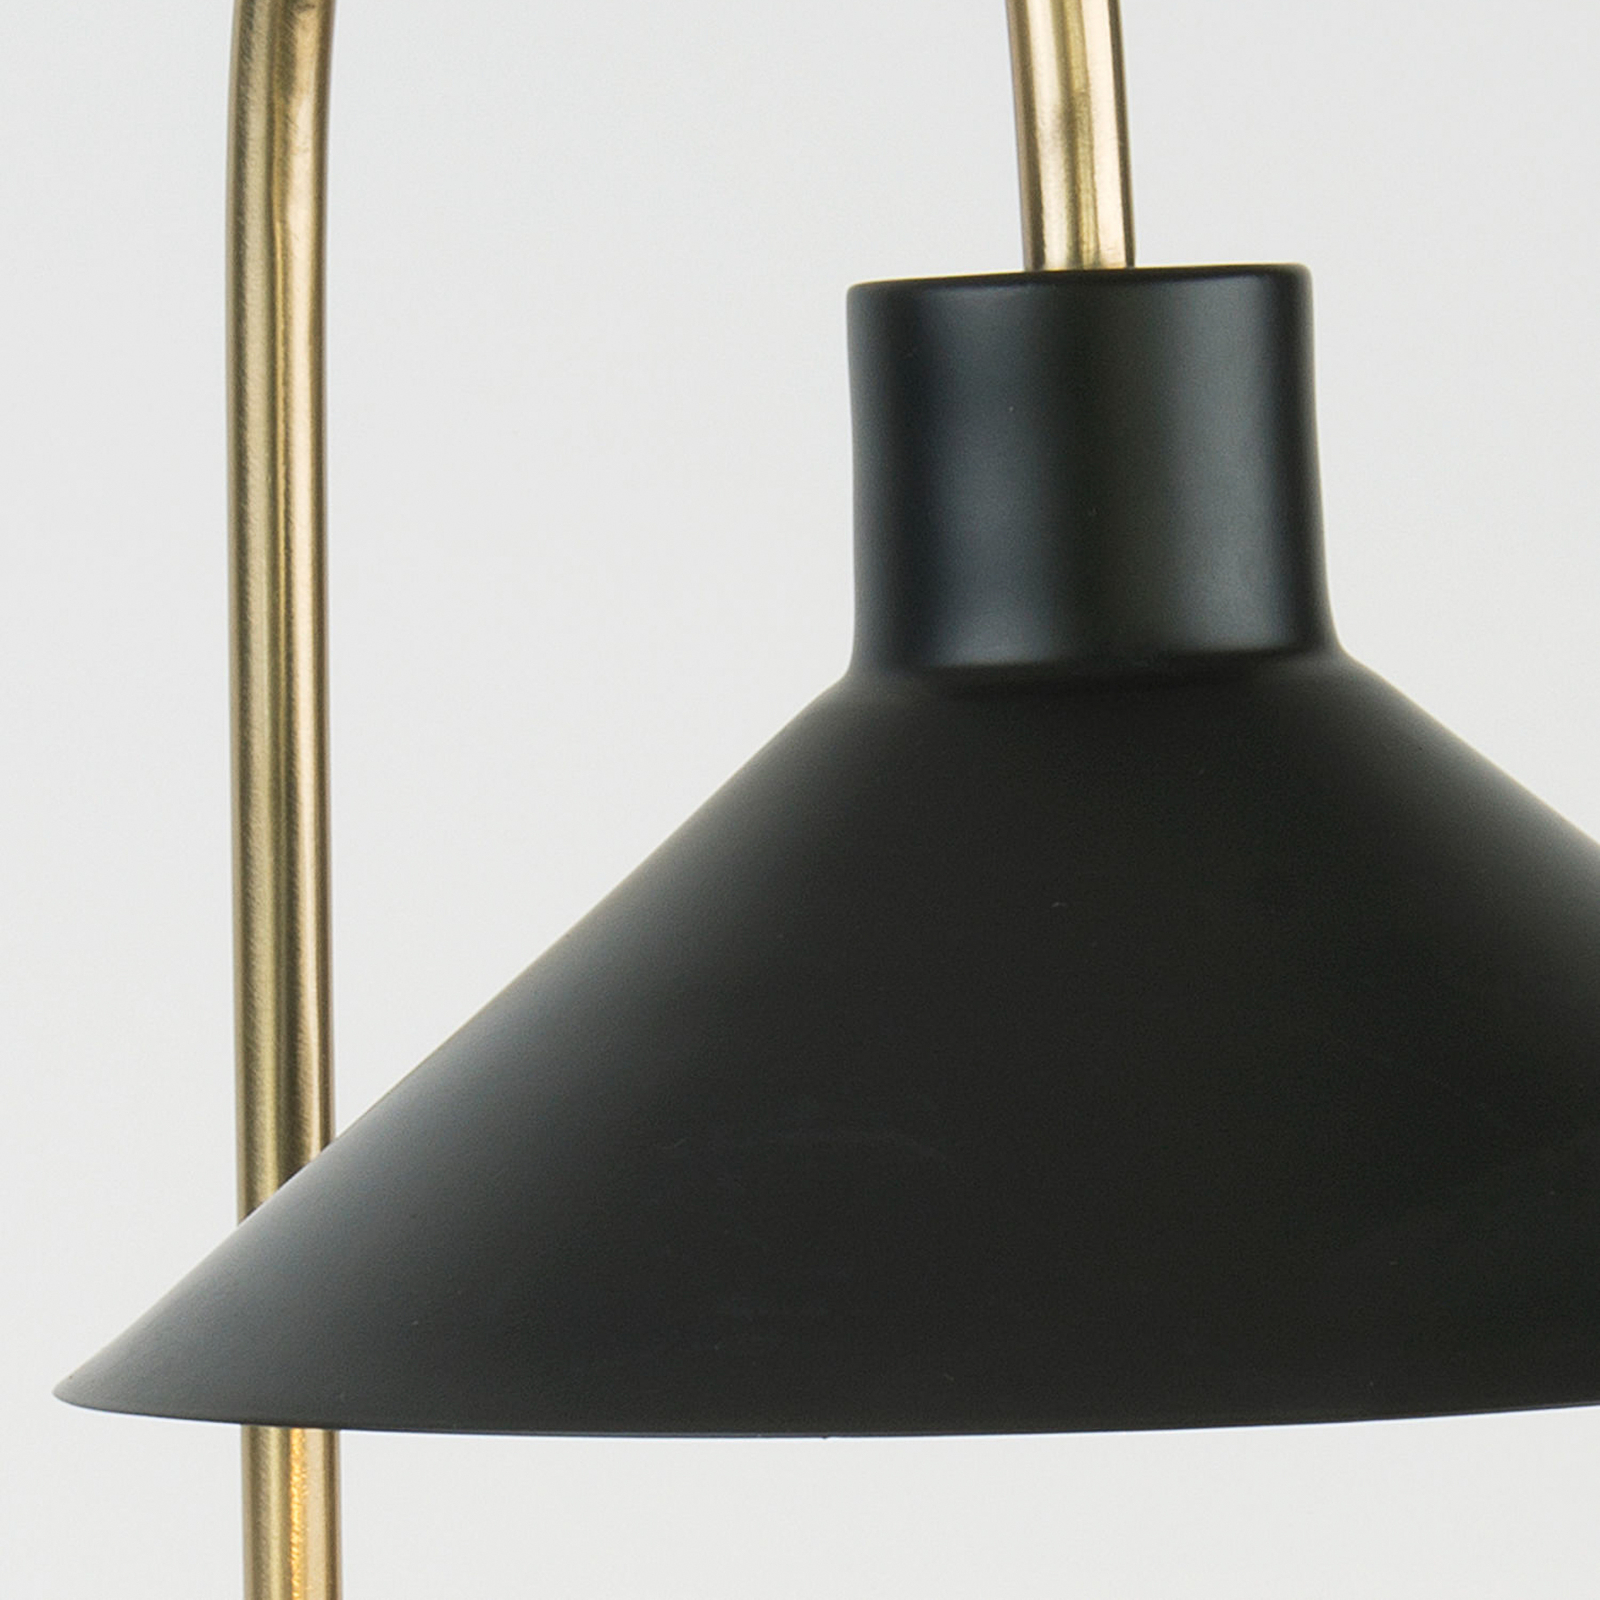 Oktavia tafellamp, zwart/goudkleurig, hoogte 58 cm, marmer